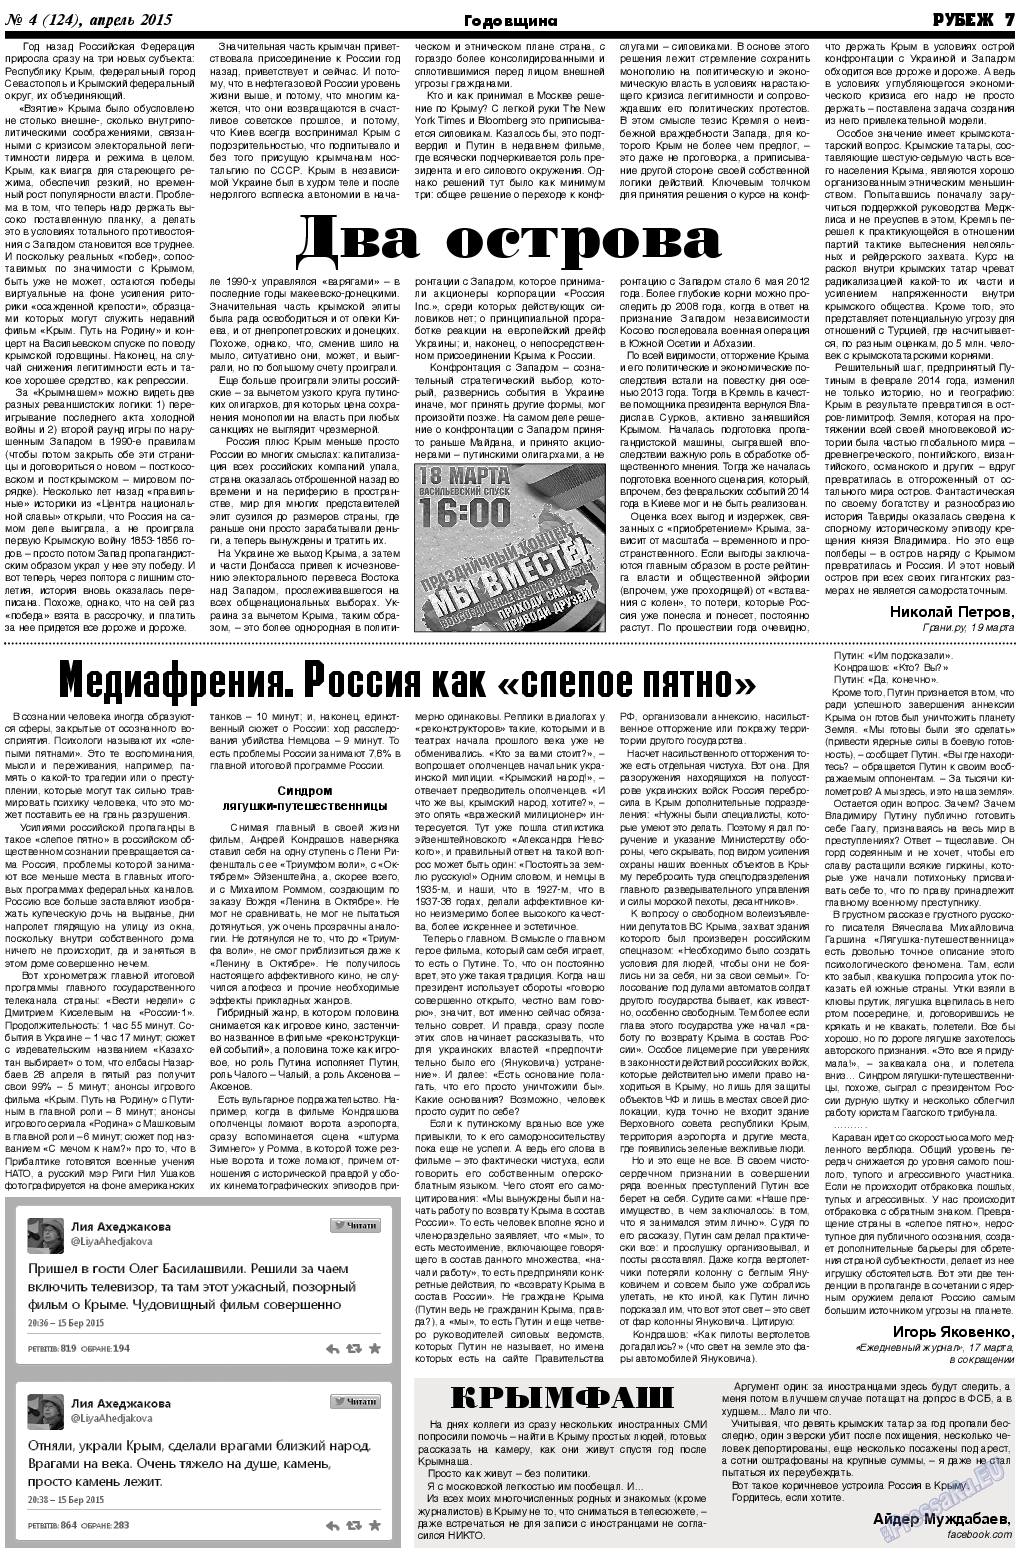 Рубеж, газета. 2015 №4 стр.7